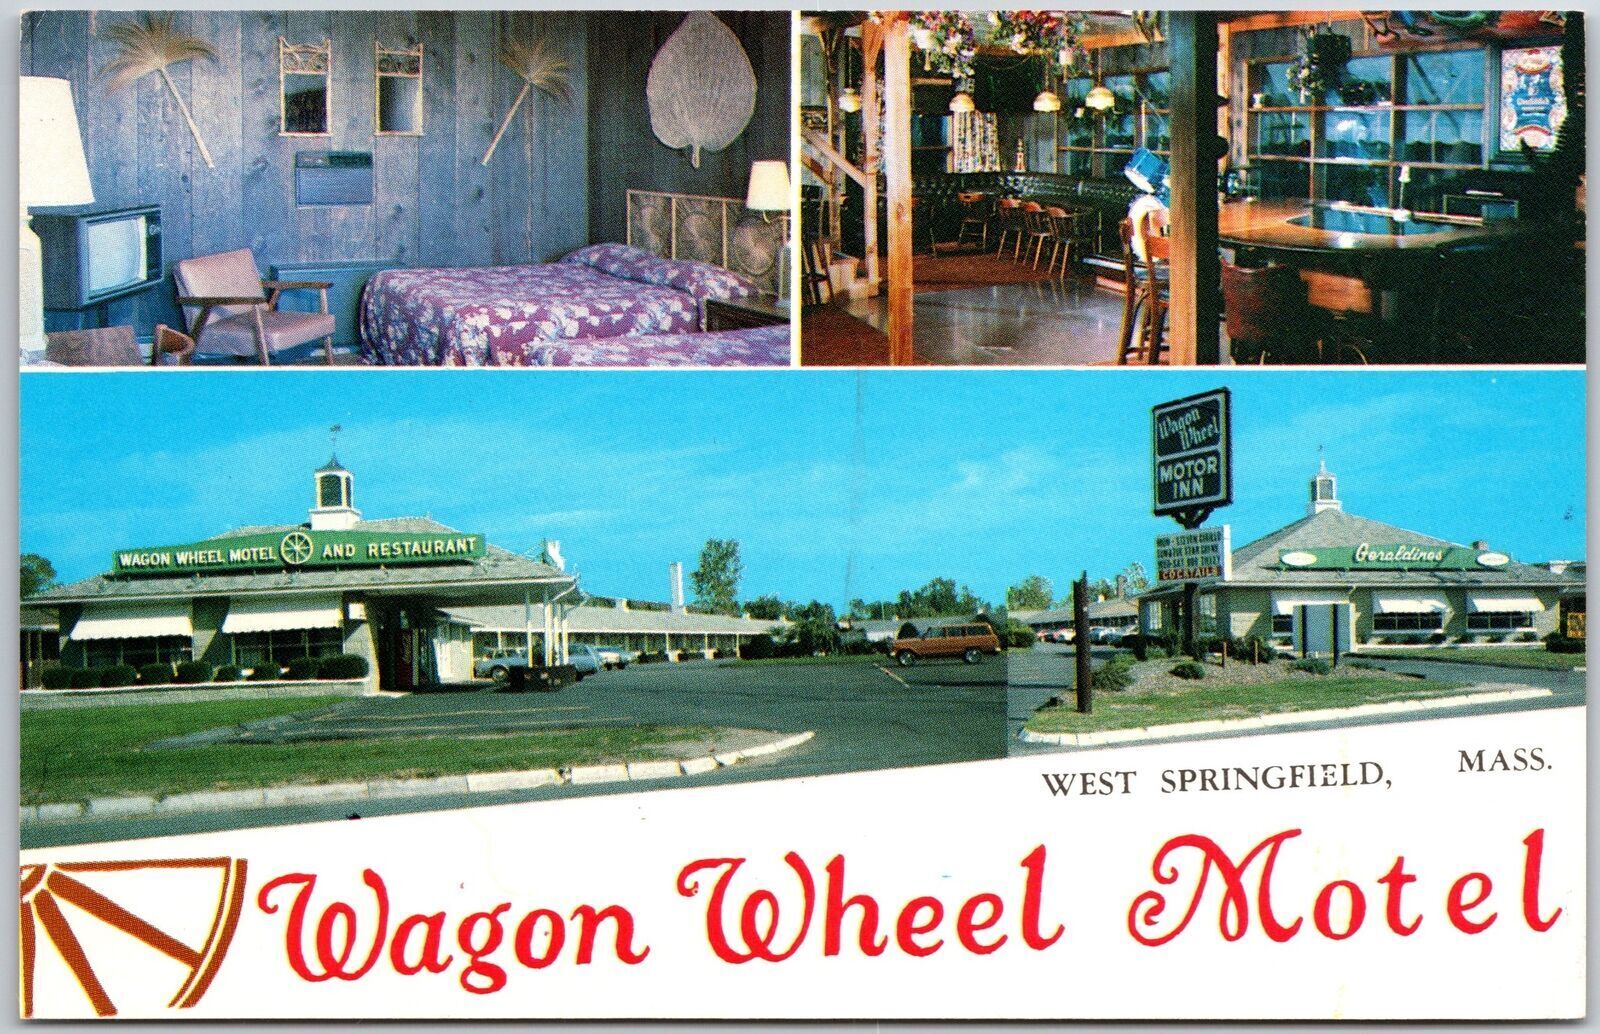 Wagon Wheel Motor Inn West Springfield Massachusetts Restaurant & Rooms Postcard